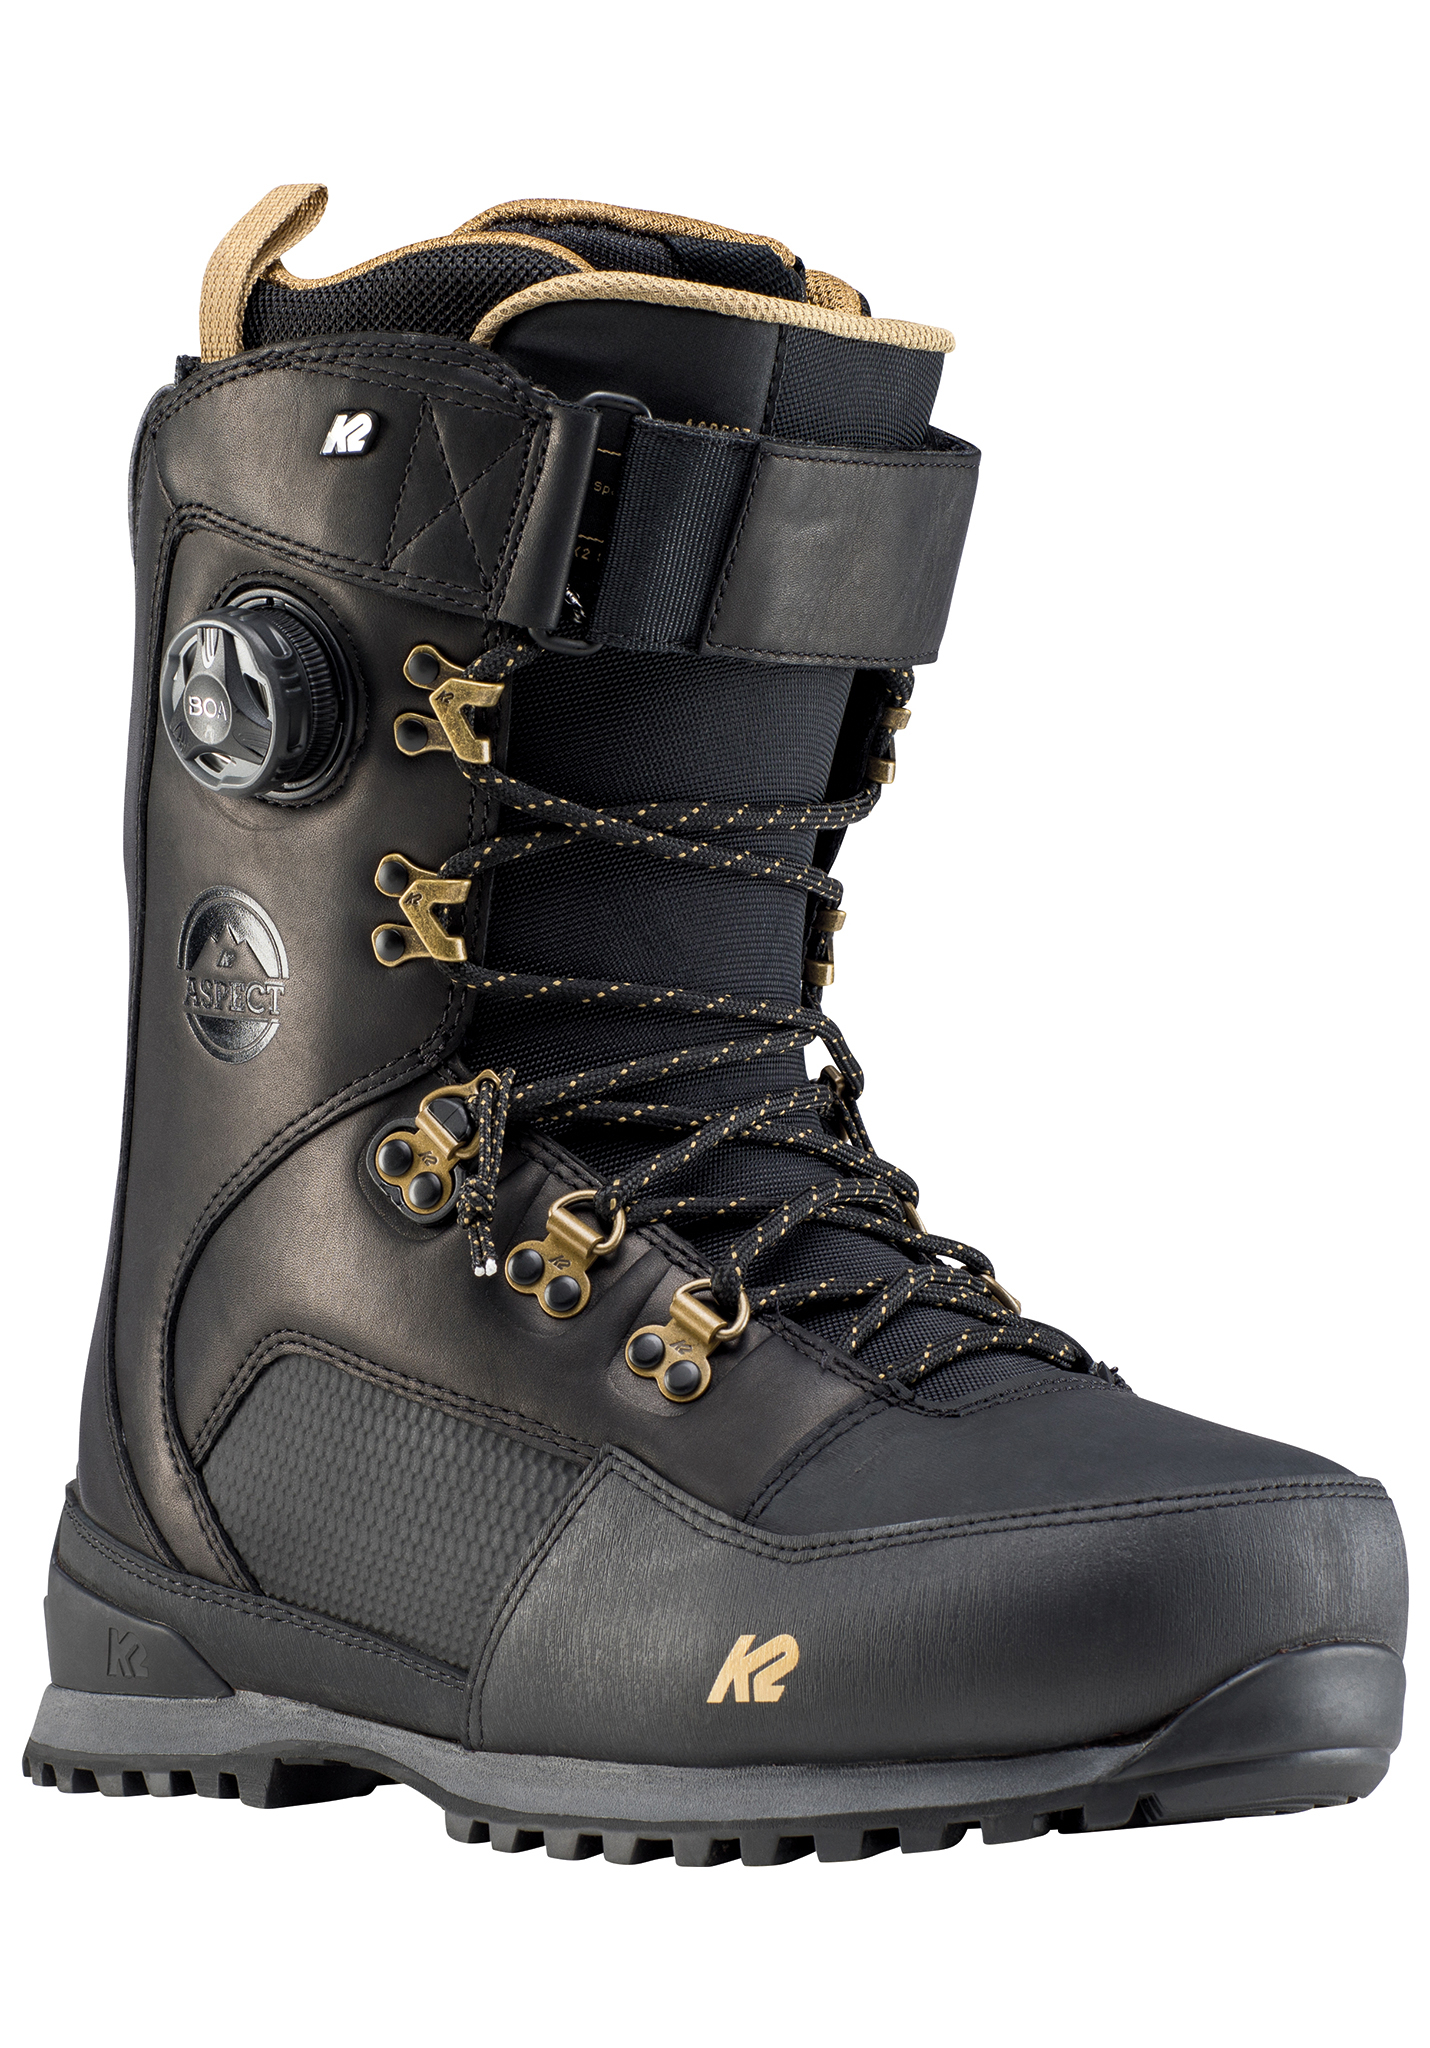 K2 Snowboarding Aspect All Mountain Snowboard Boots black 45